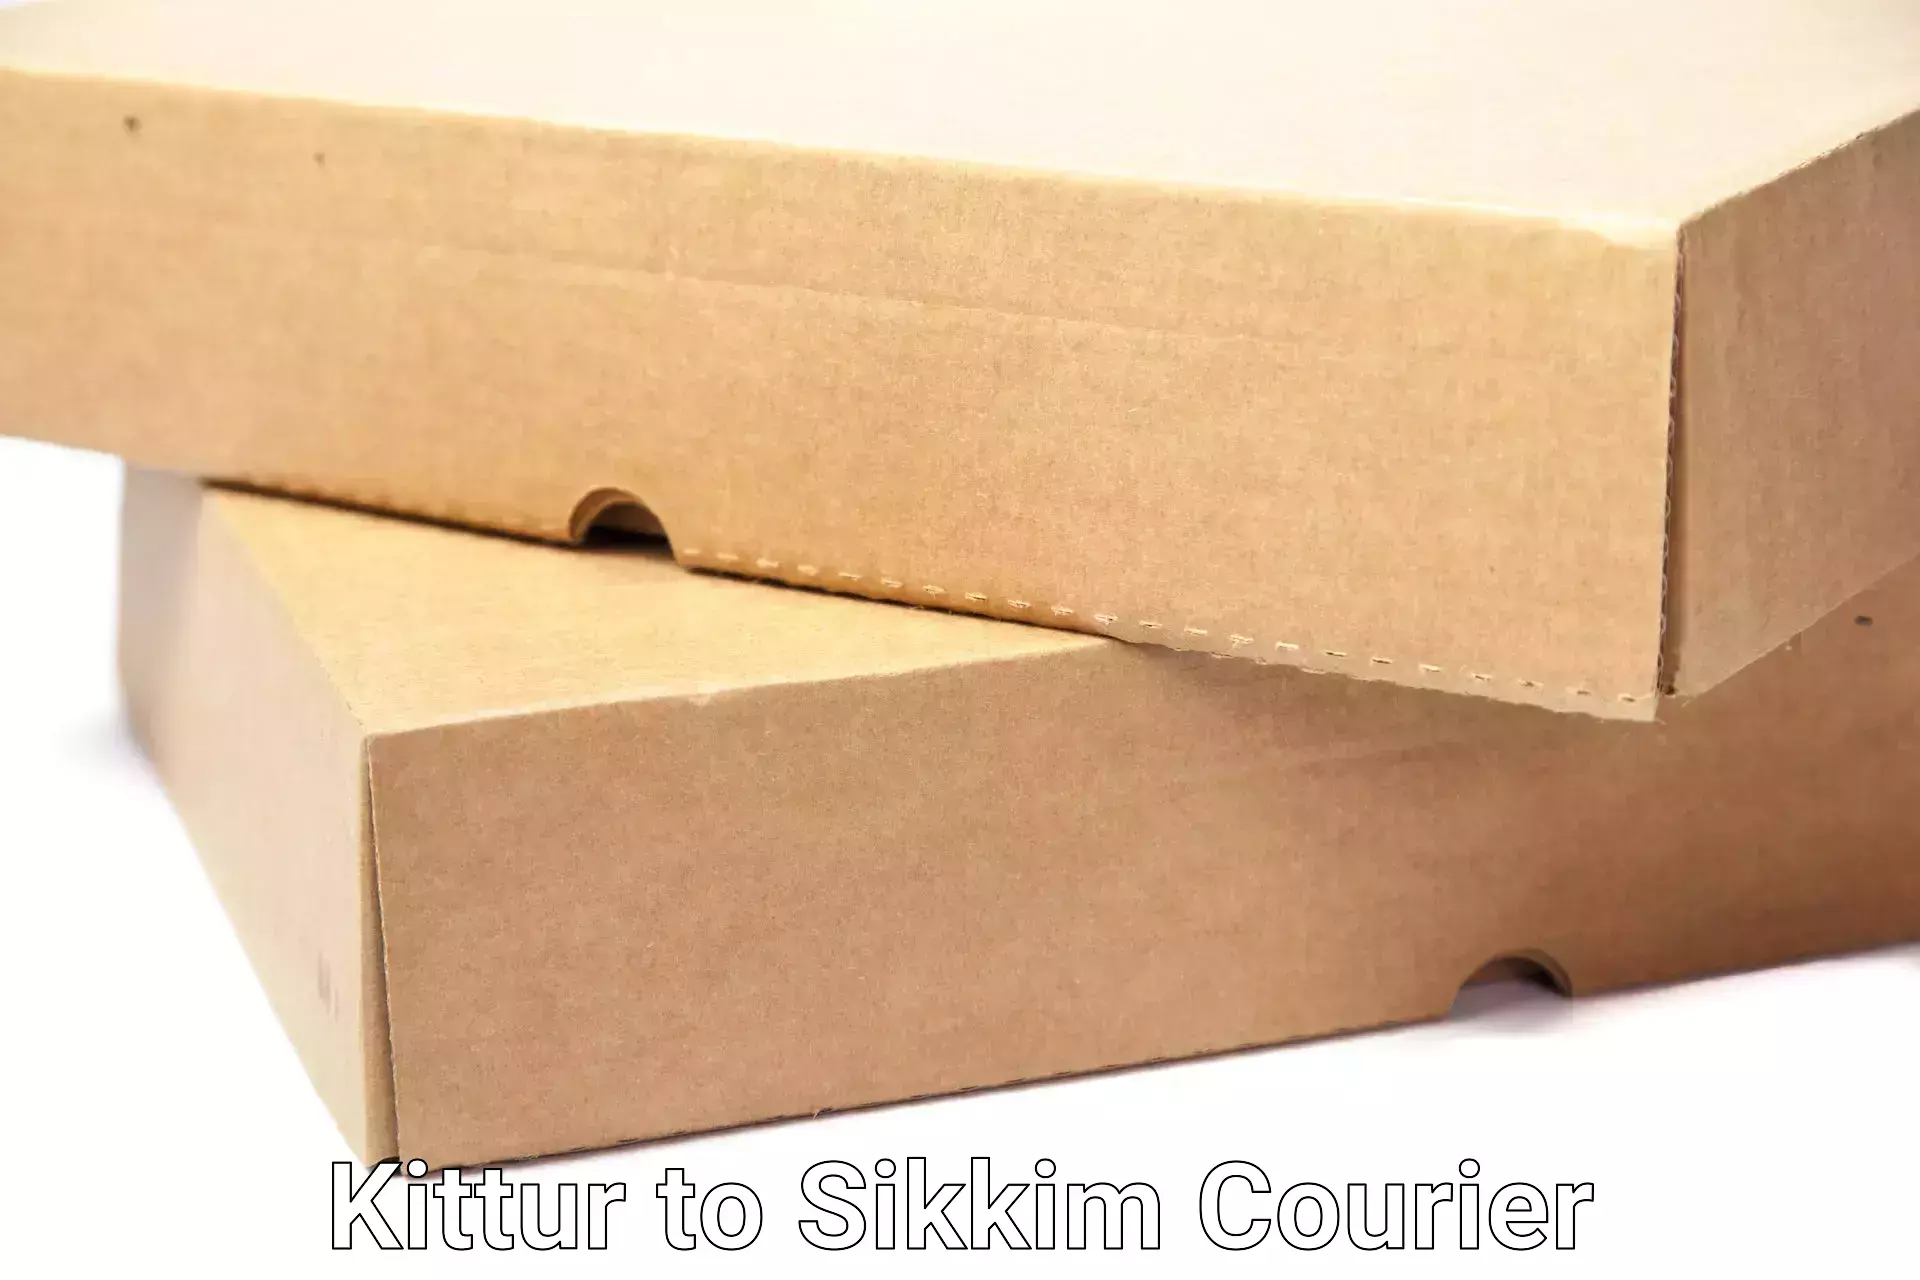 Expert goods movers Kittur to Geyzing